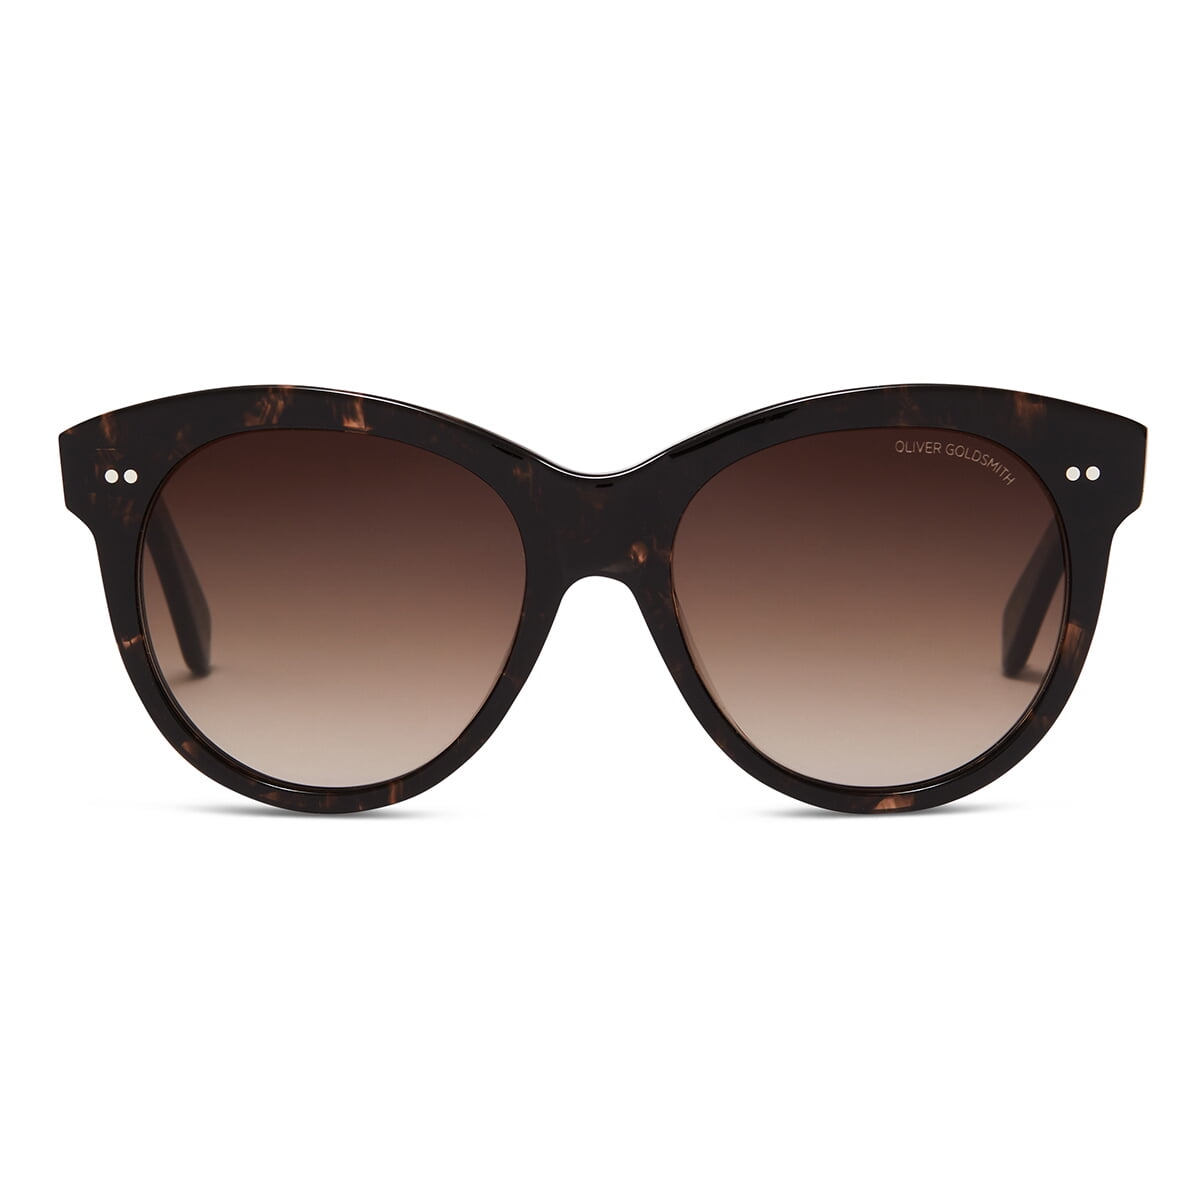 Oliver Goldsmith Manhattan Small Sunglasses